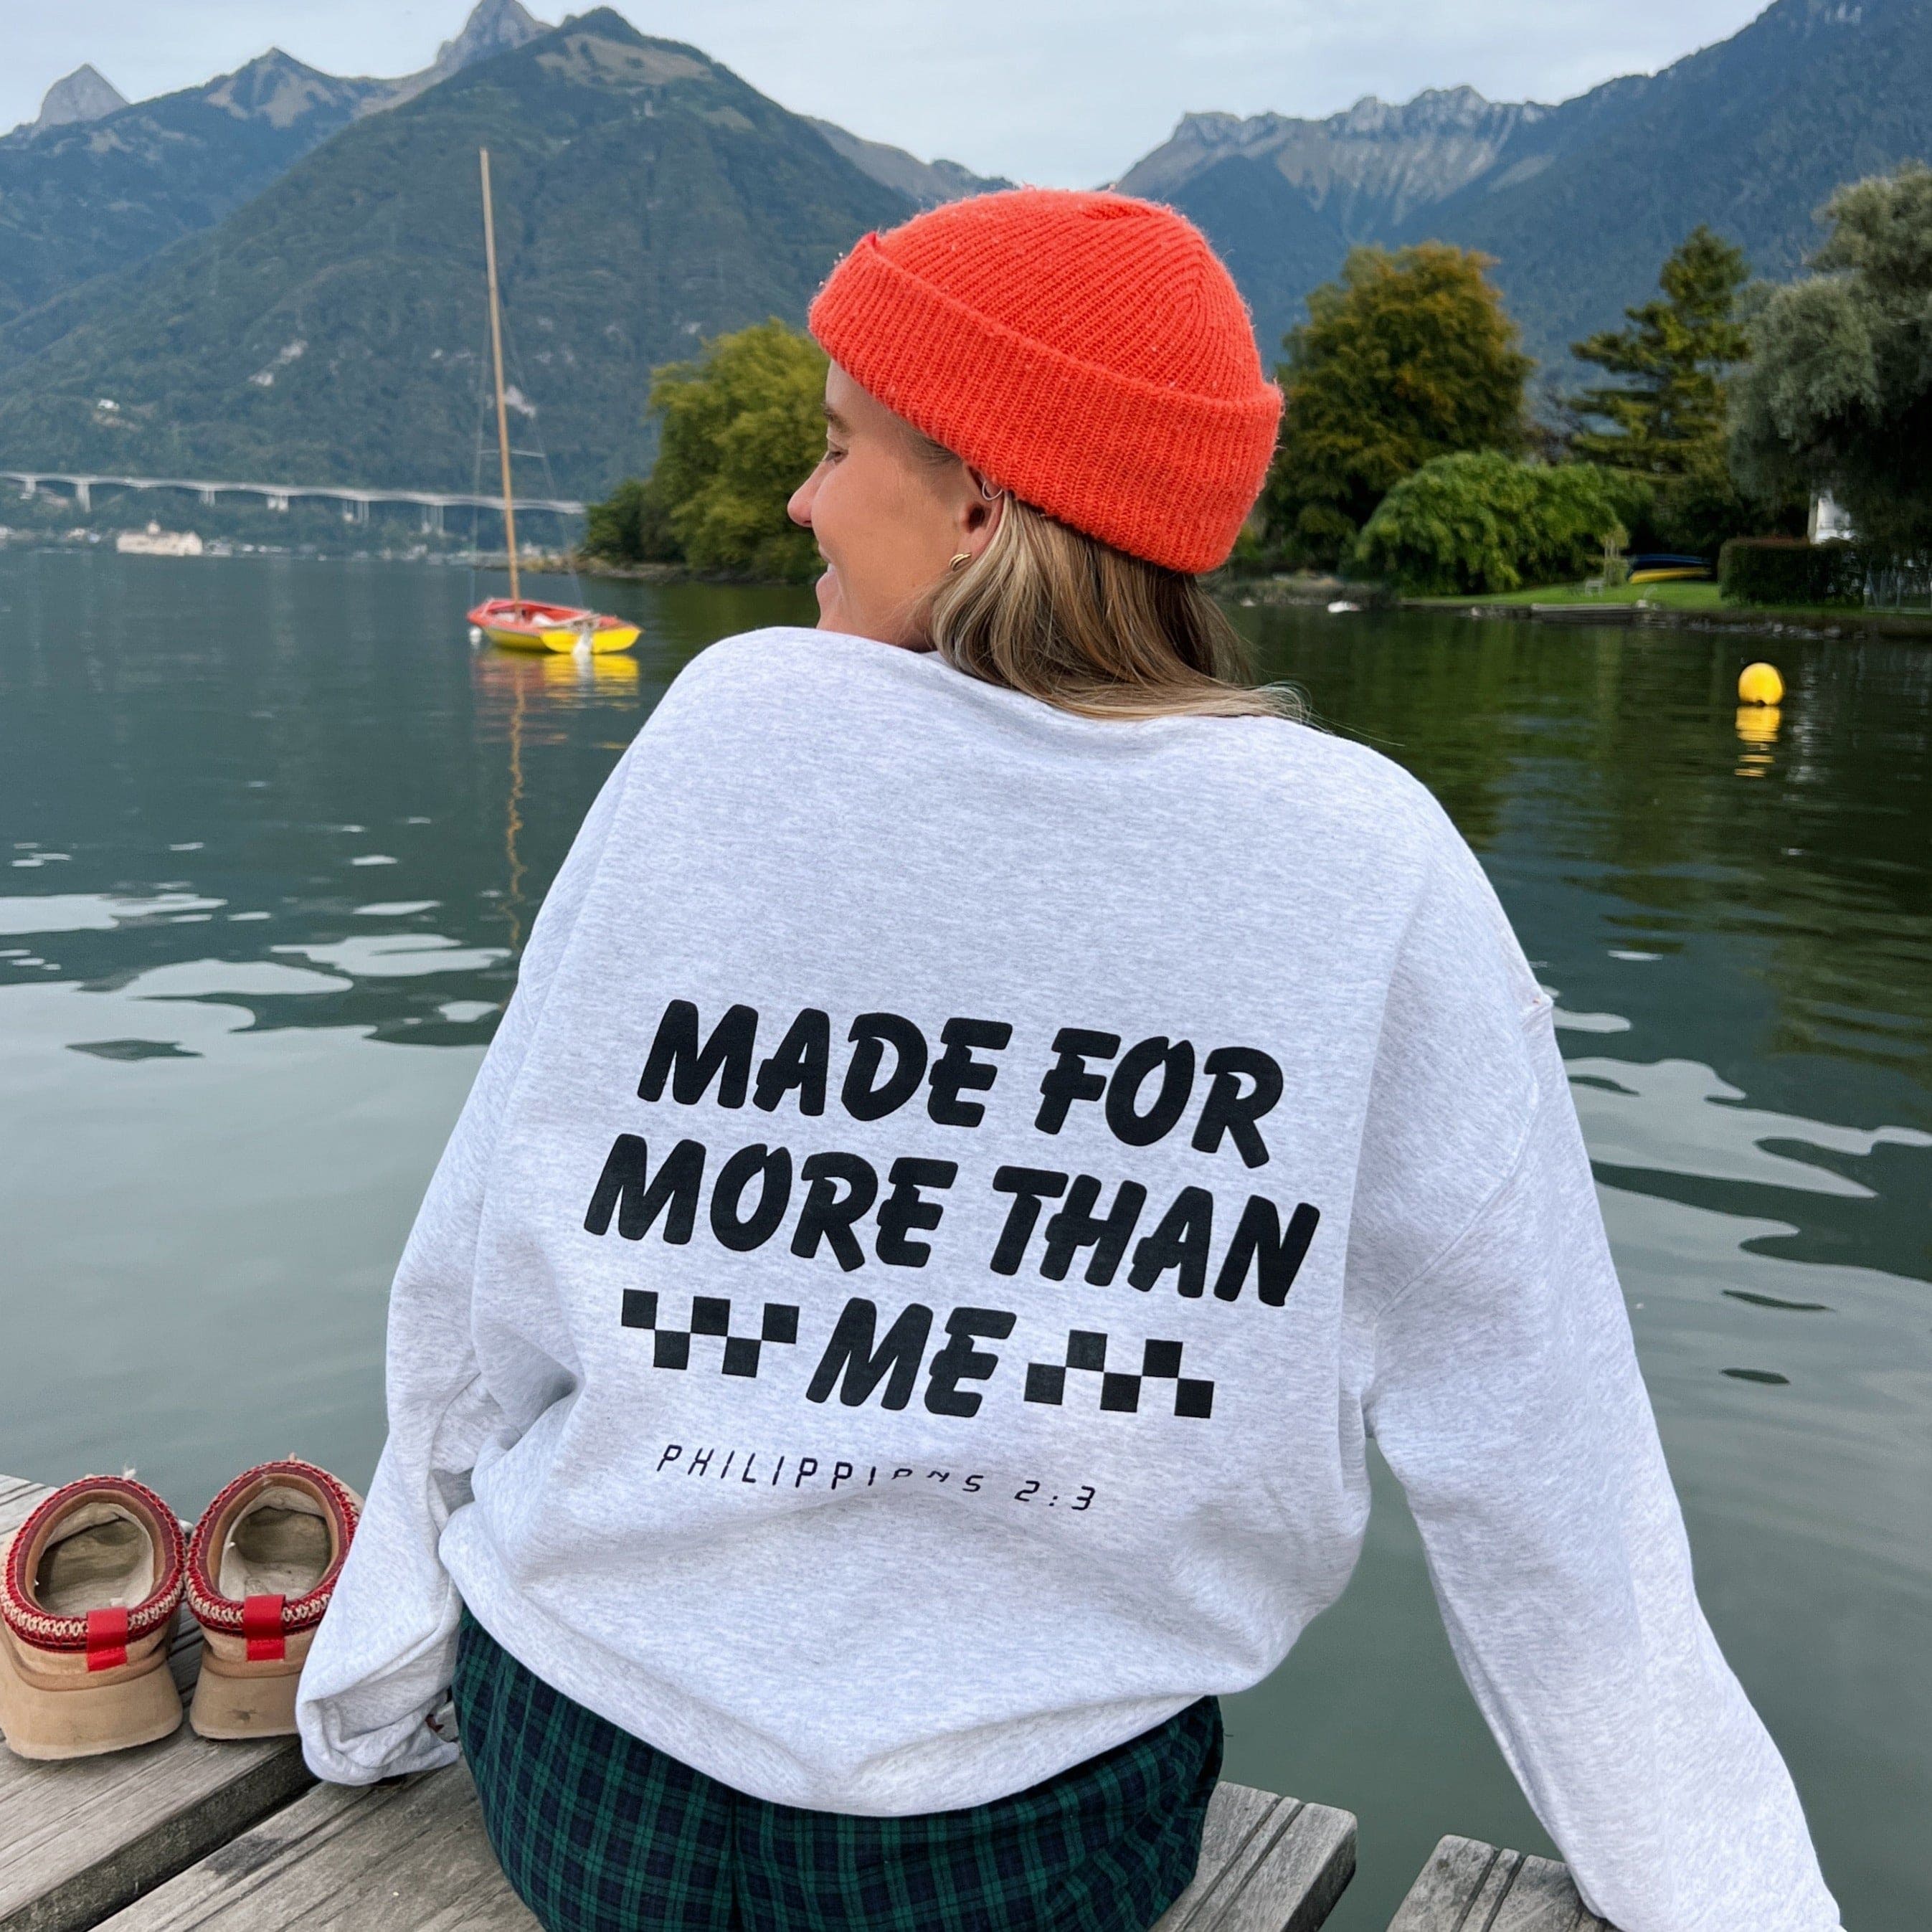 LMTE Love will Save Crewneck Sweatshirt – Love More Than Ever